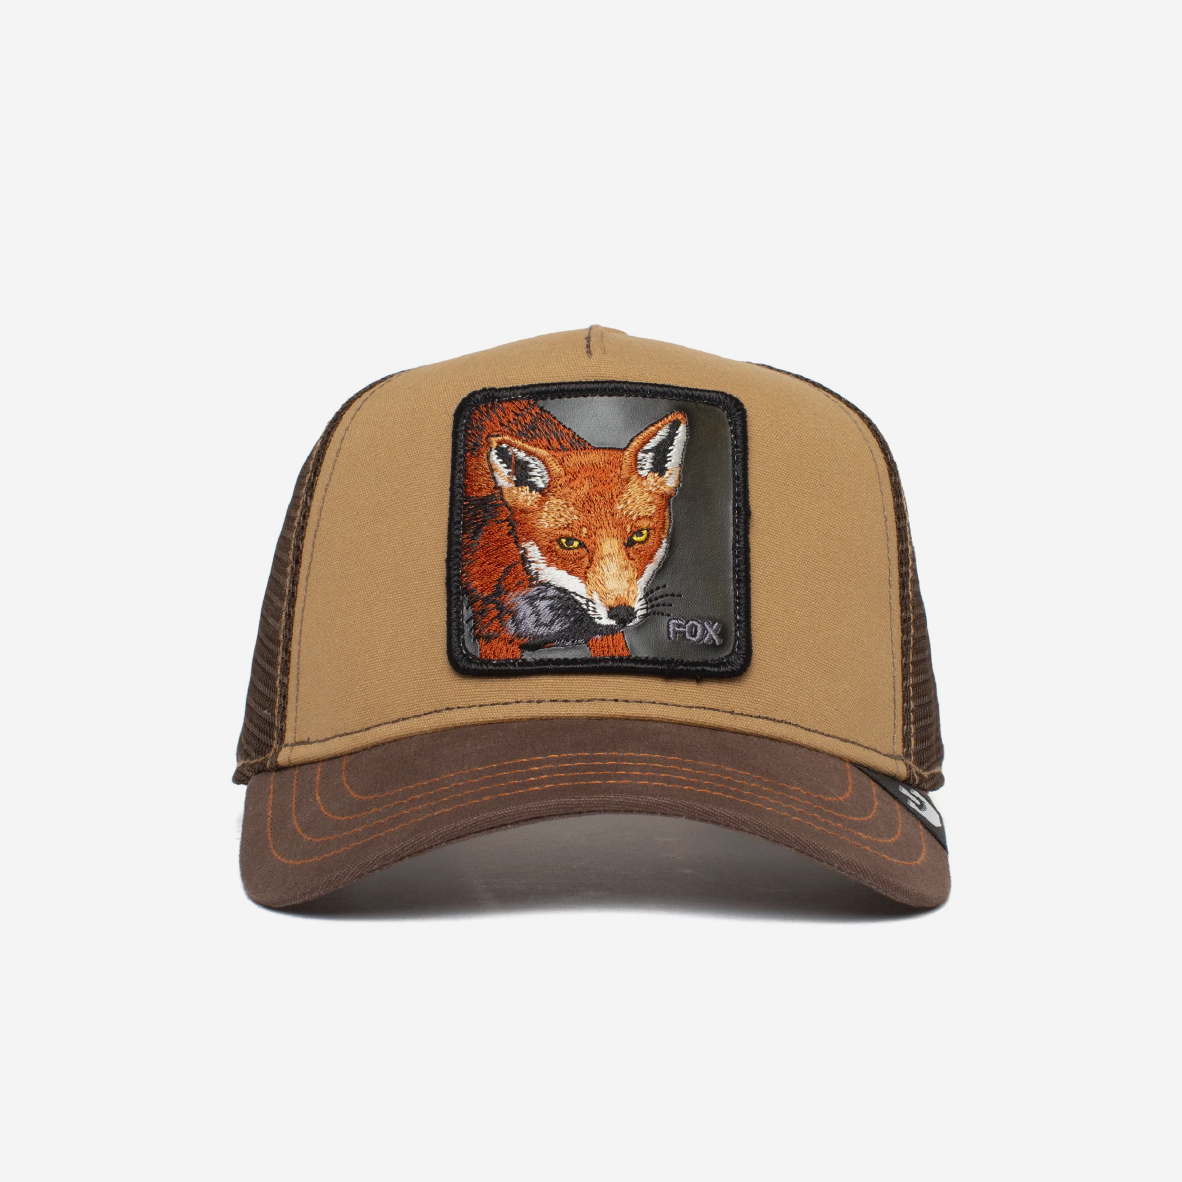 The Fox Trucker - Brown